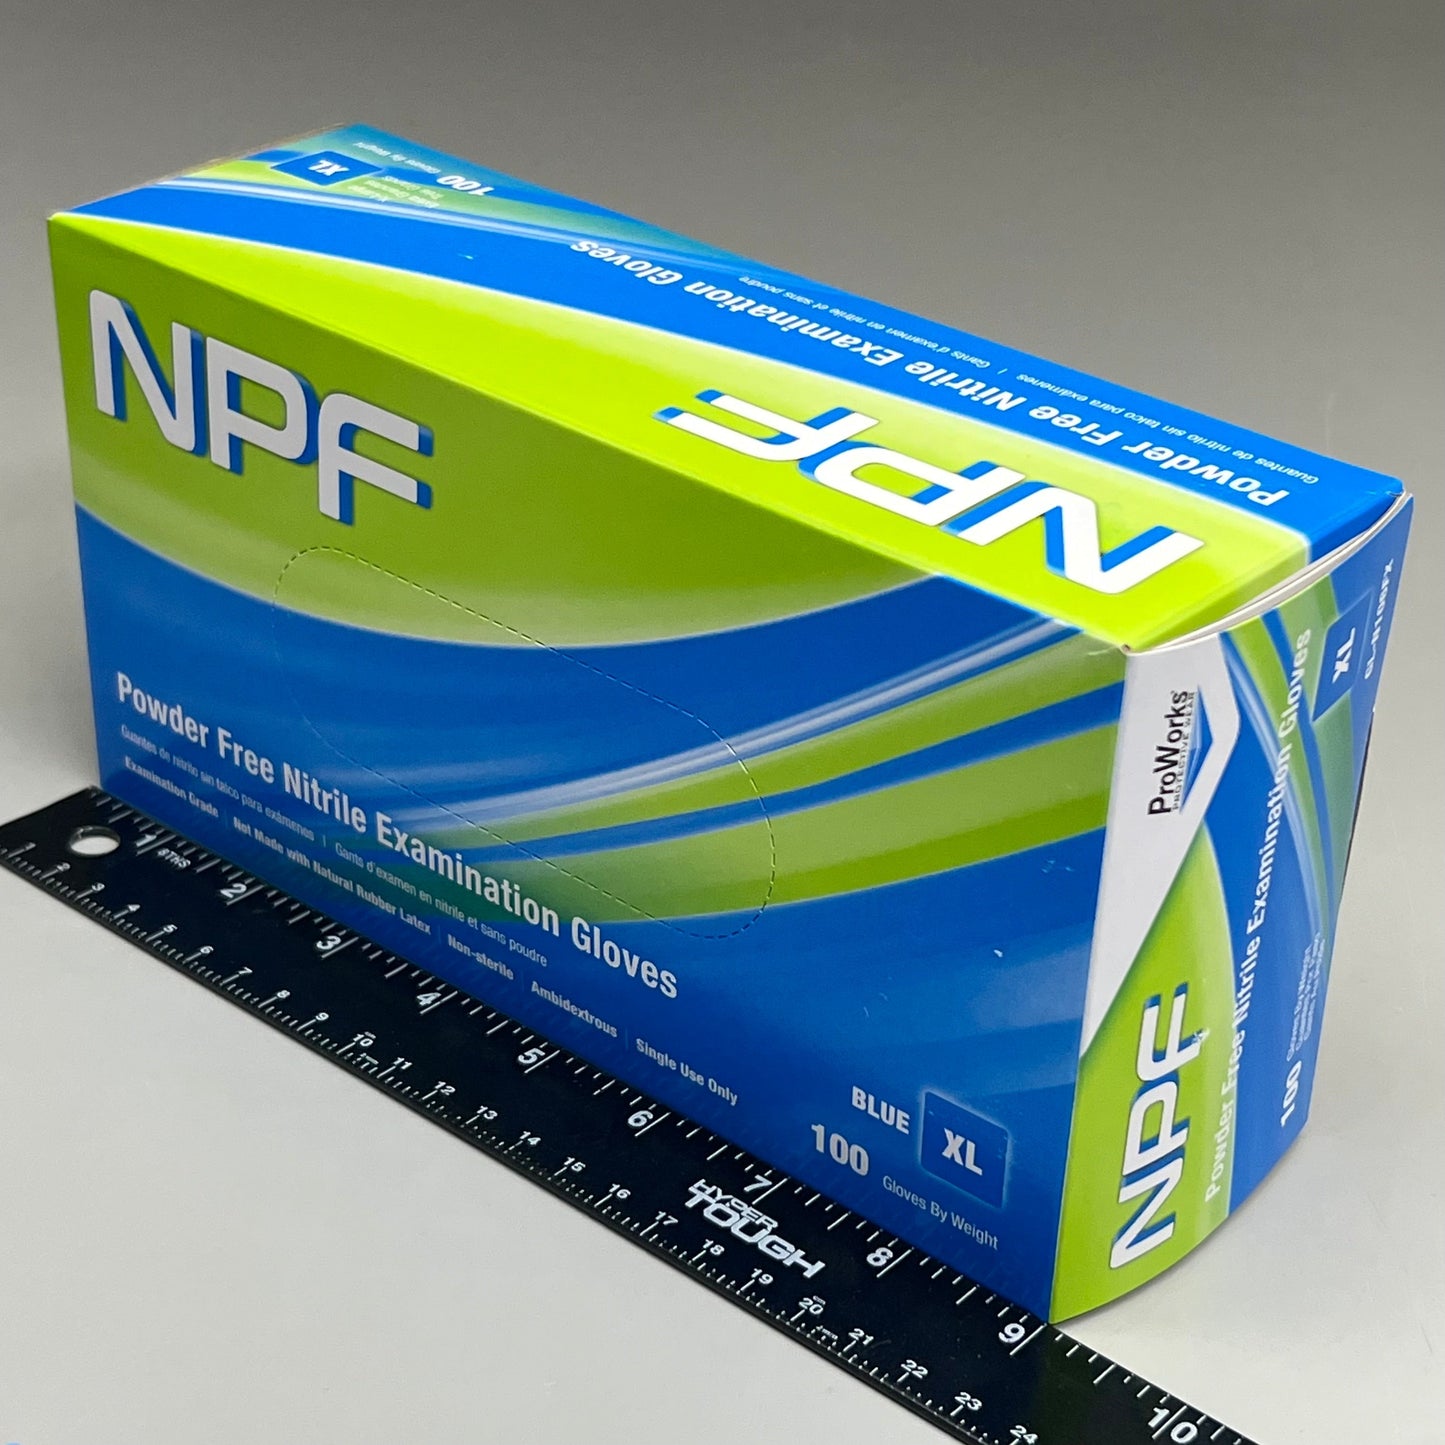 HOSPECO NPF (1,000 PACK) Nitrile Powder Free Exam Gloves Sz M Blue GL-N106FM